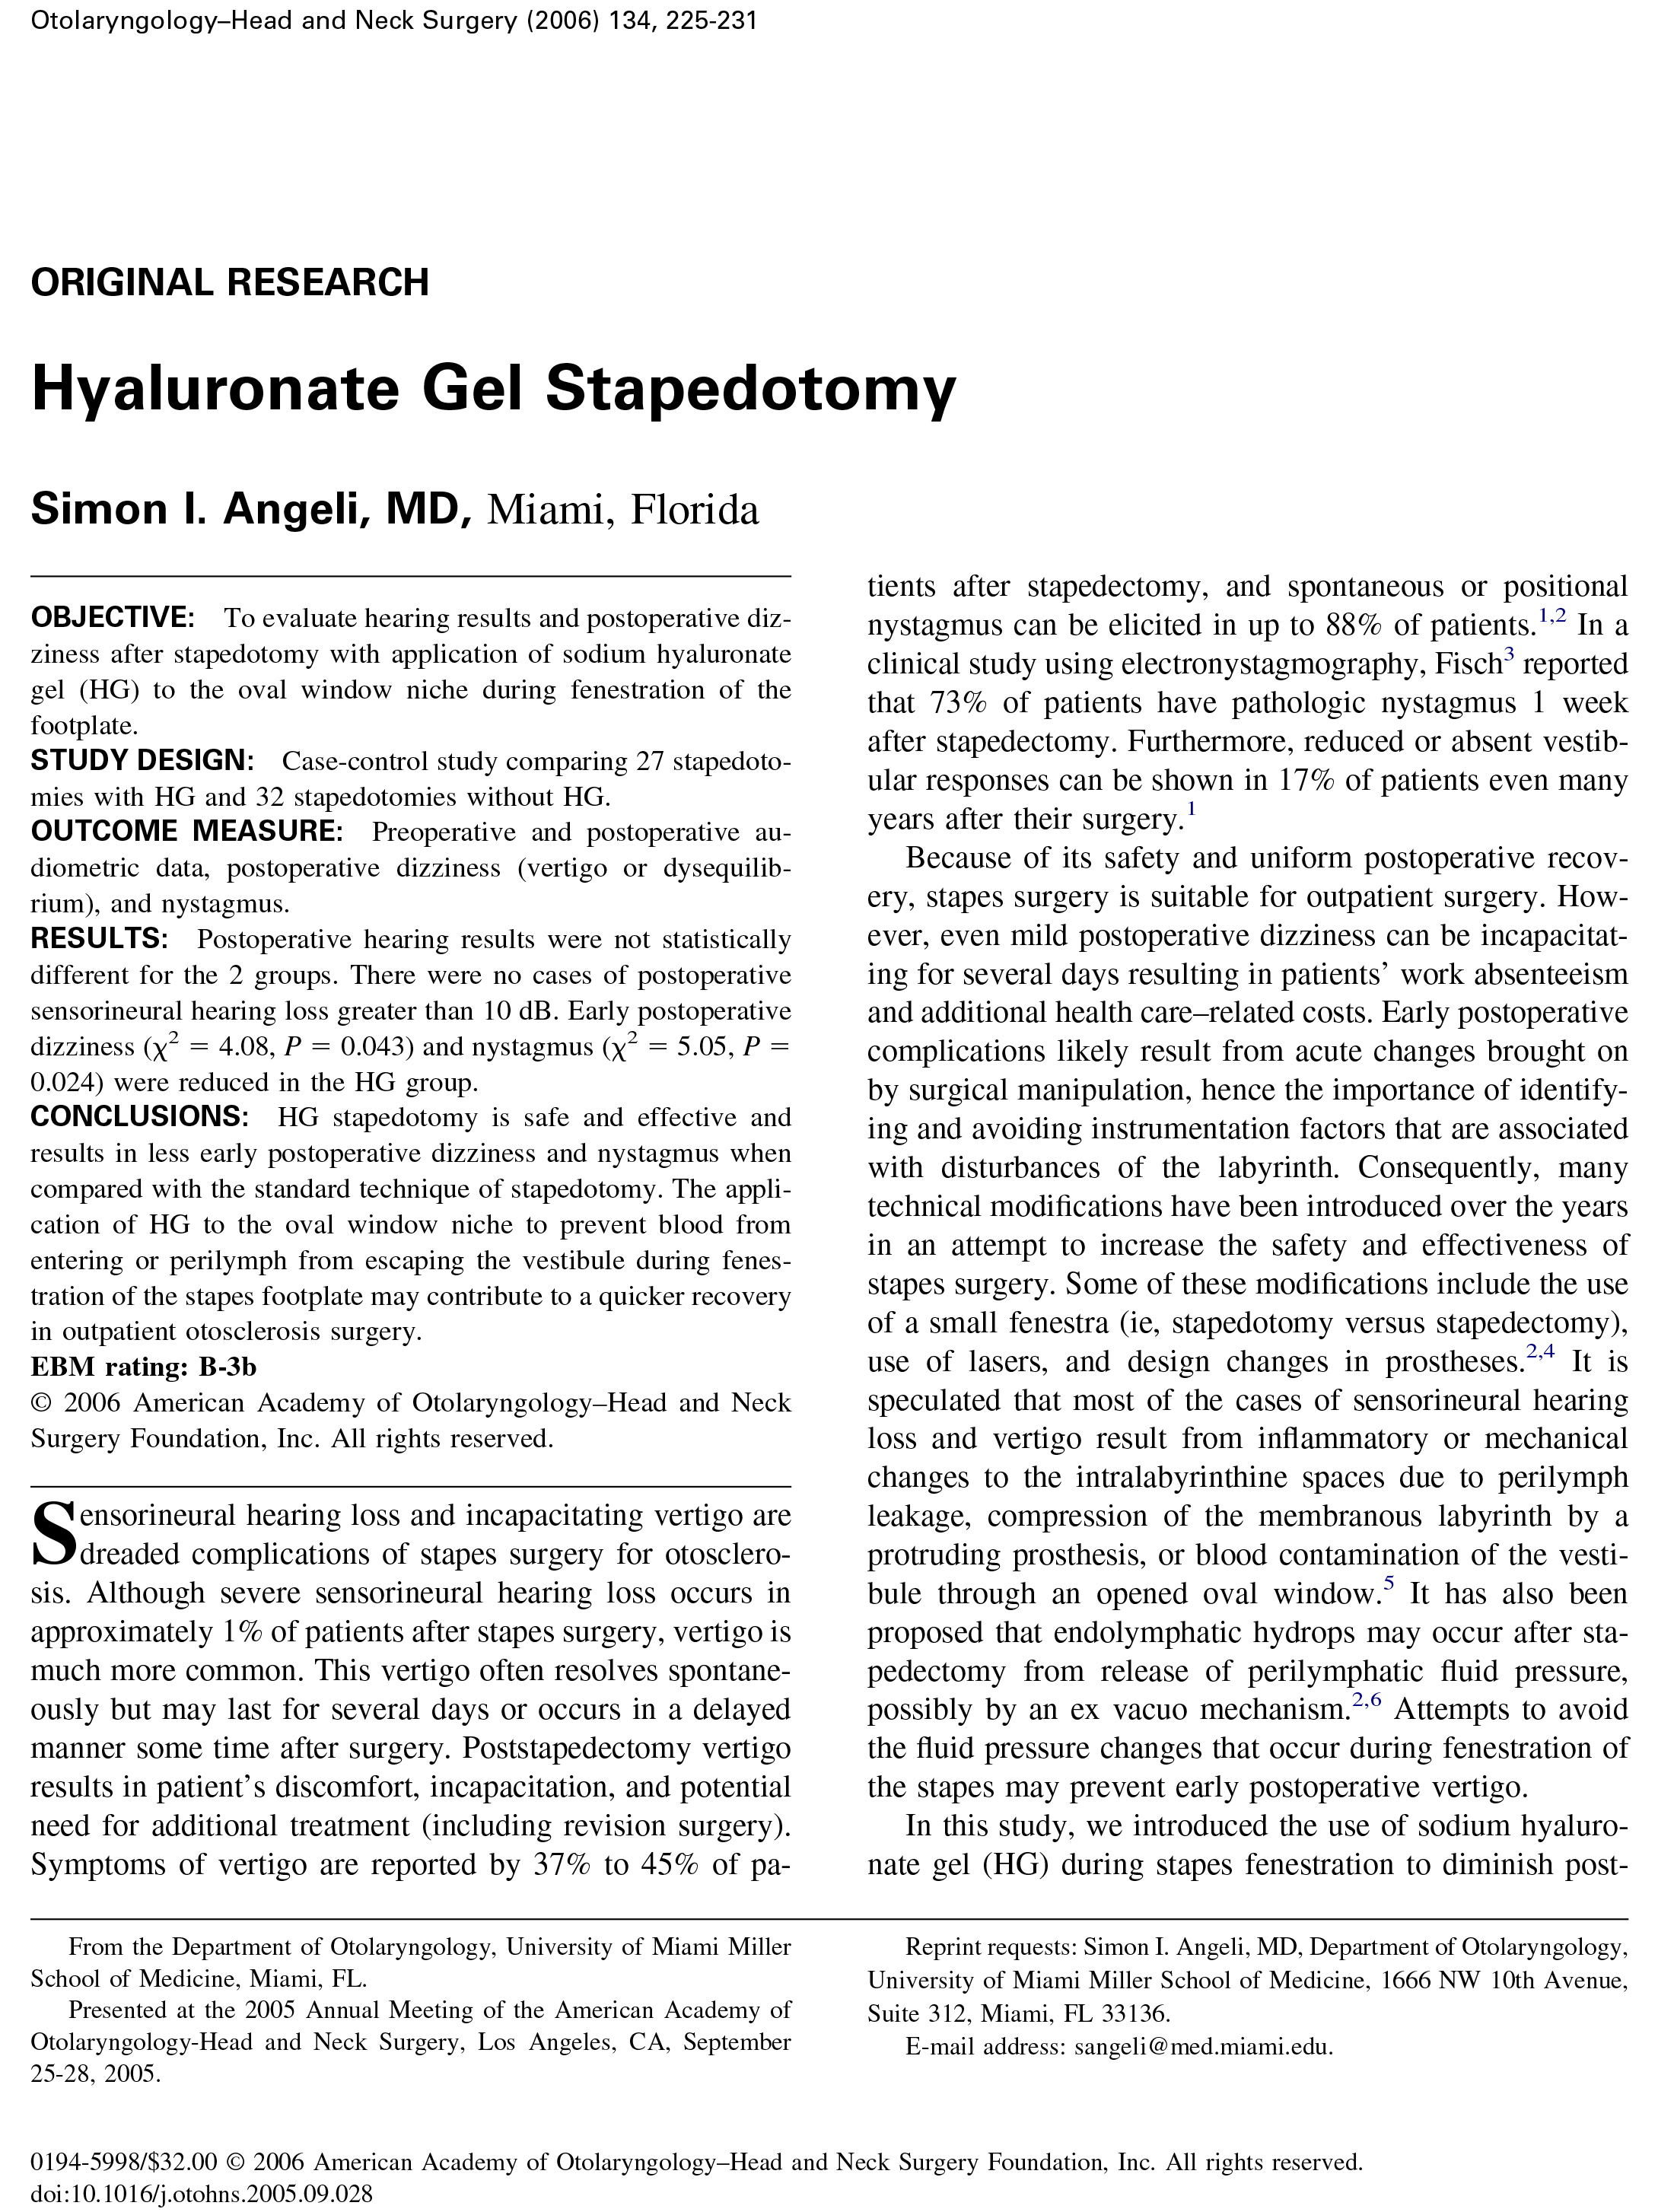 Hyaluronate-Gel-Stapedotomy-1.jpg